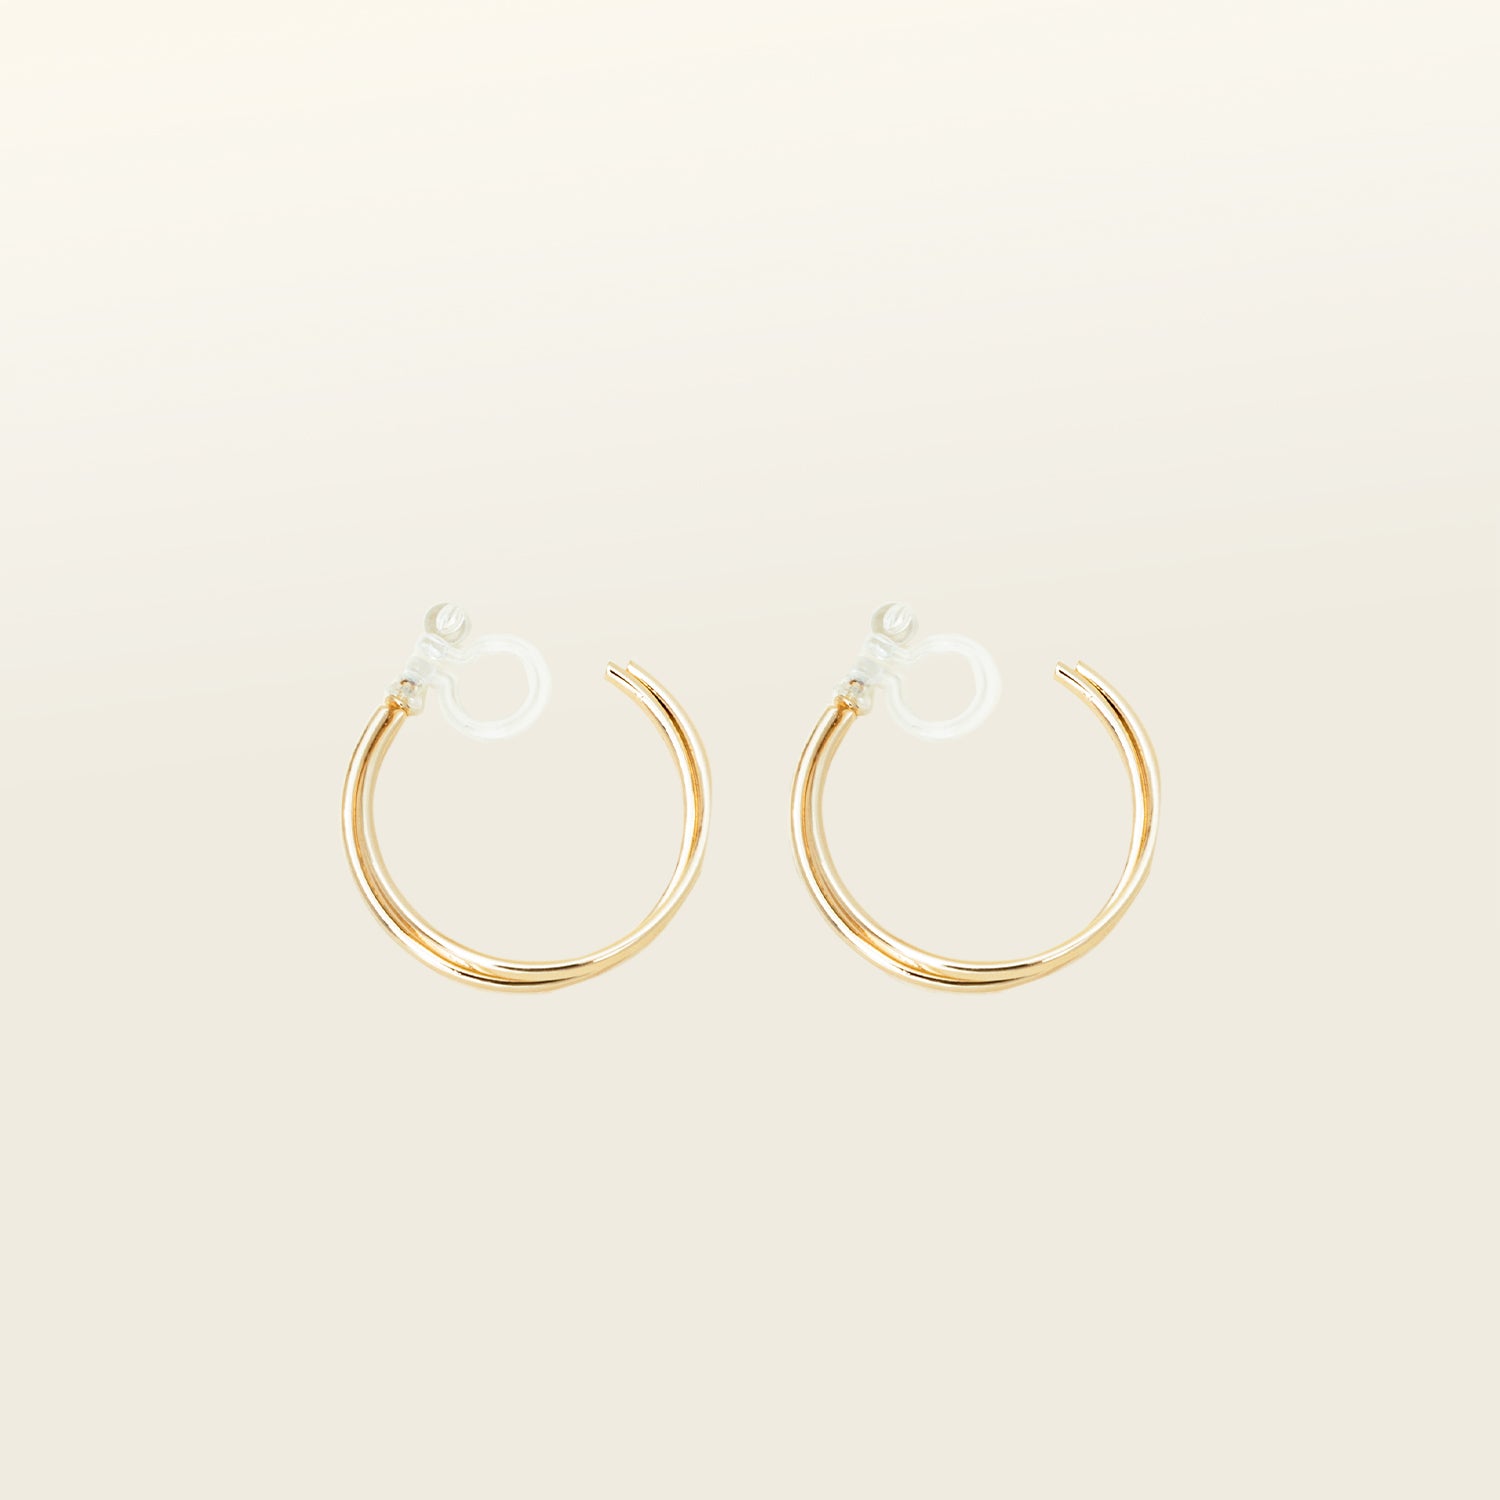 Stick on Earrings for Girls, Set of 144, Individually Packed 3D Earrin ·  Art Creativity